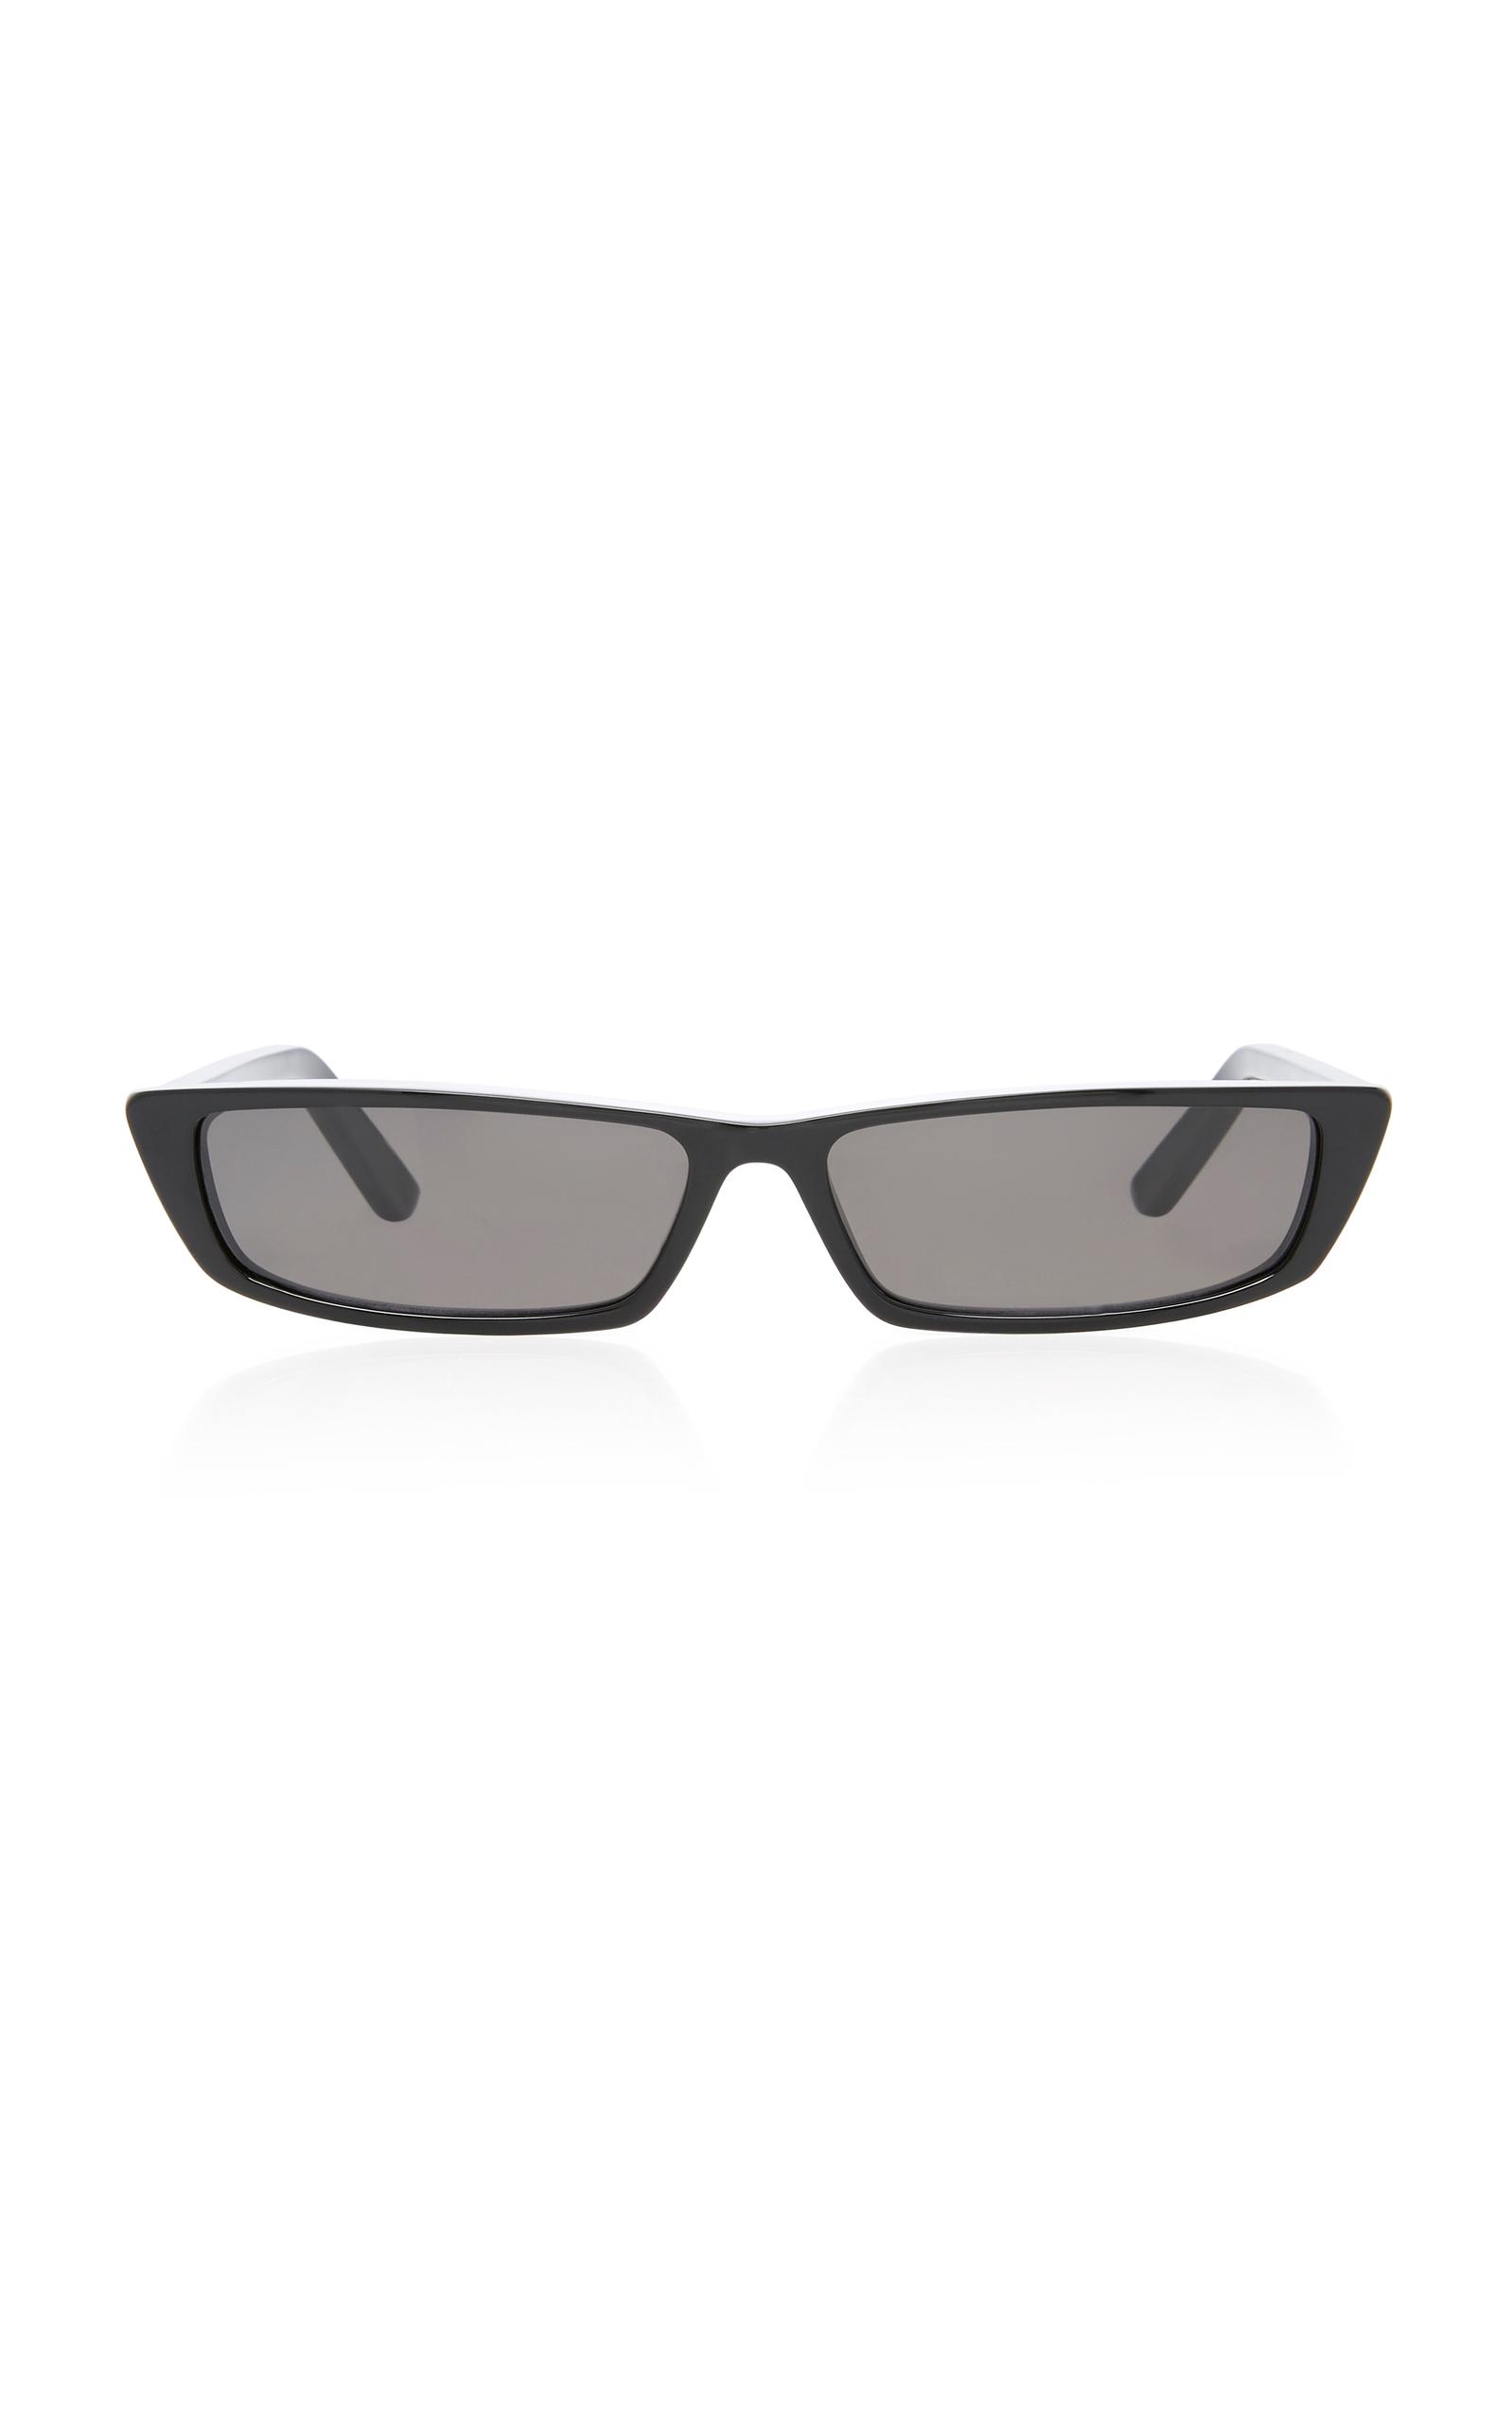 Balenciaga Slim Retro Acetate Sunglasses in Black | Lyst Canada